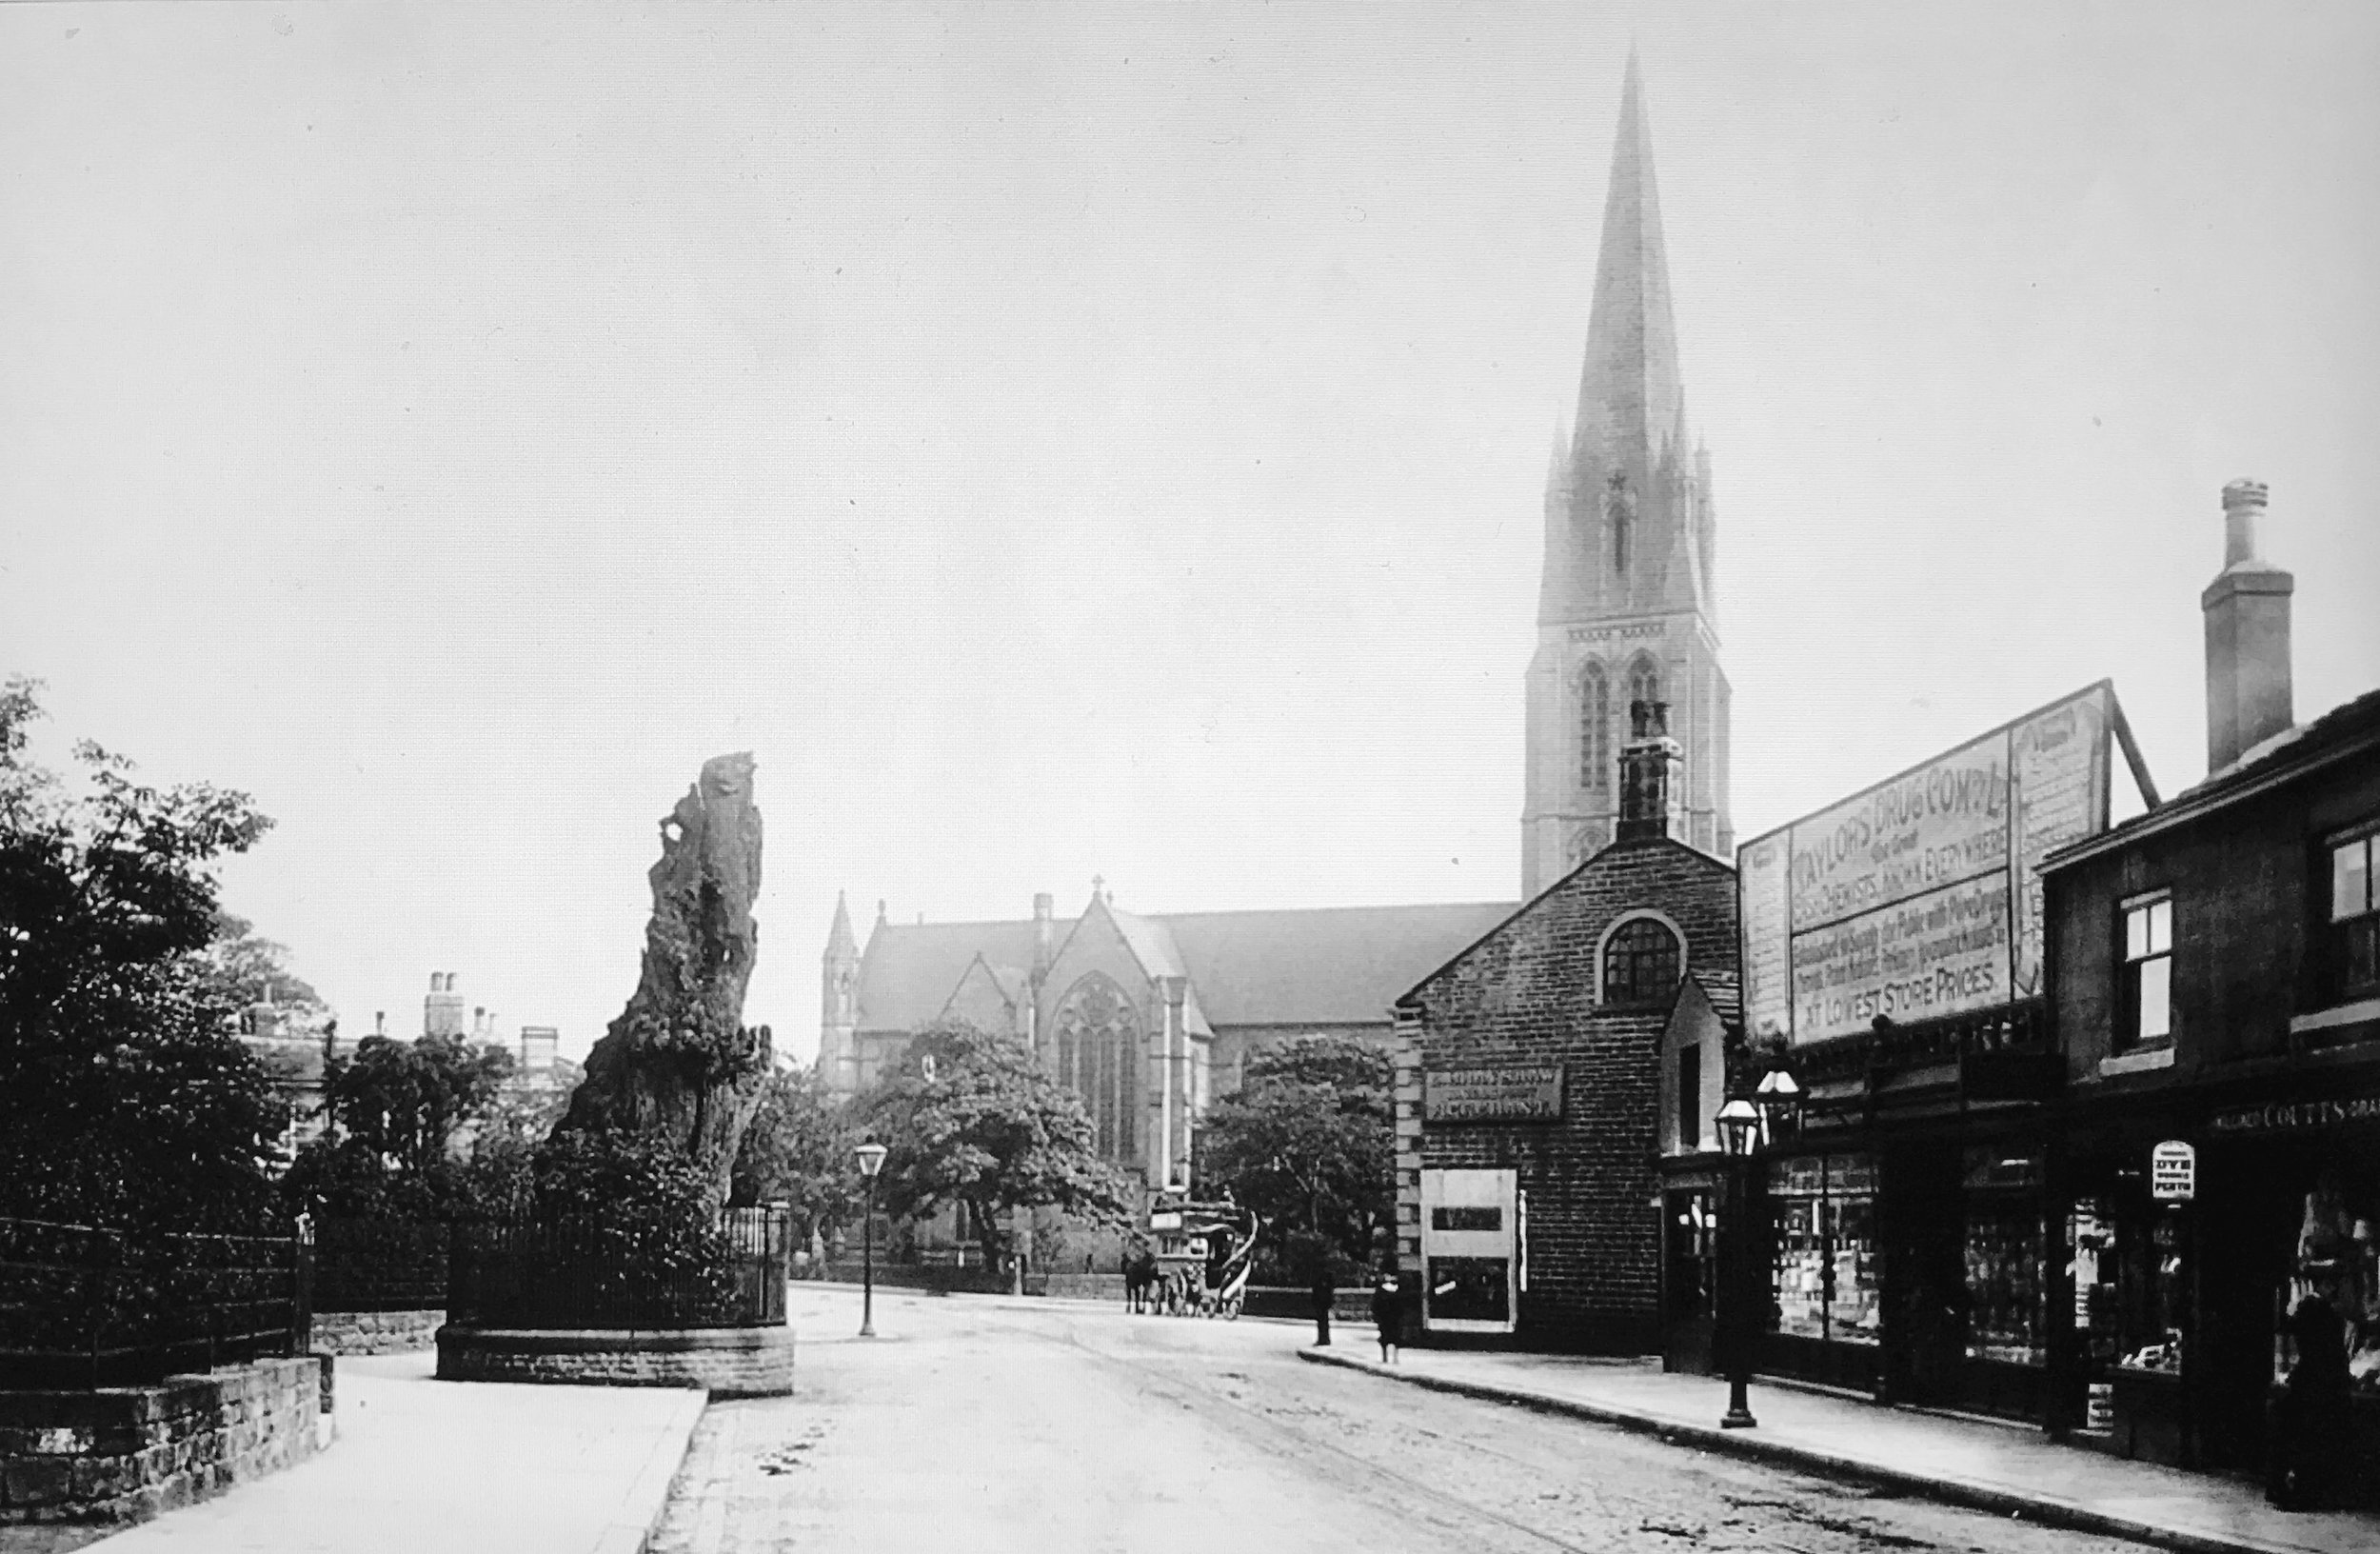 Shire Oak, St Michael's Church and Skyrack Inn, 1897